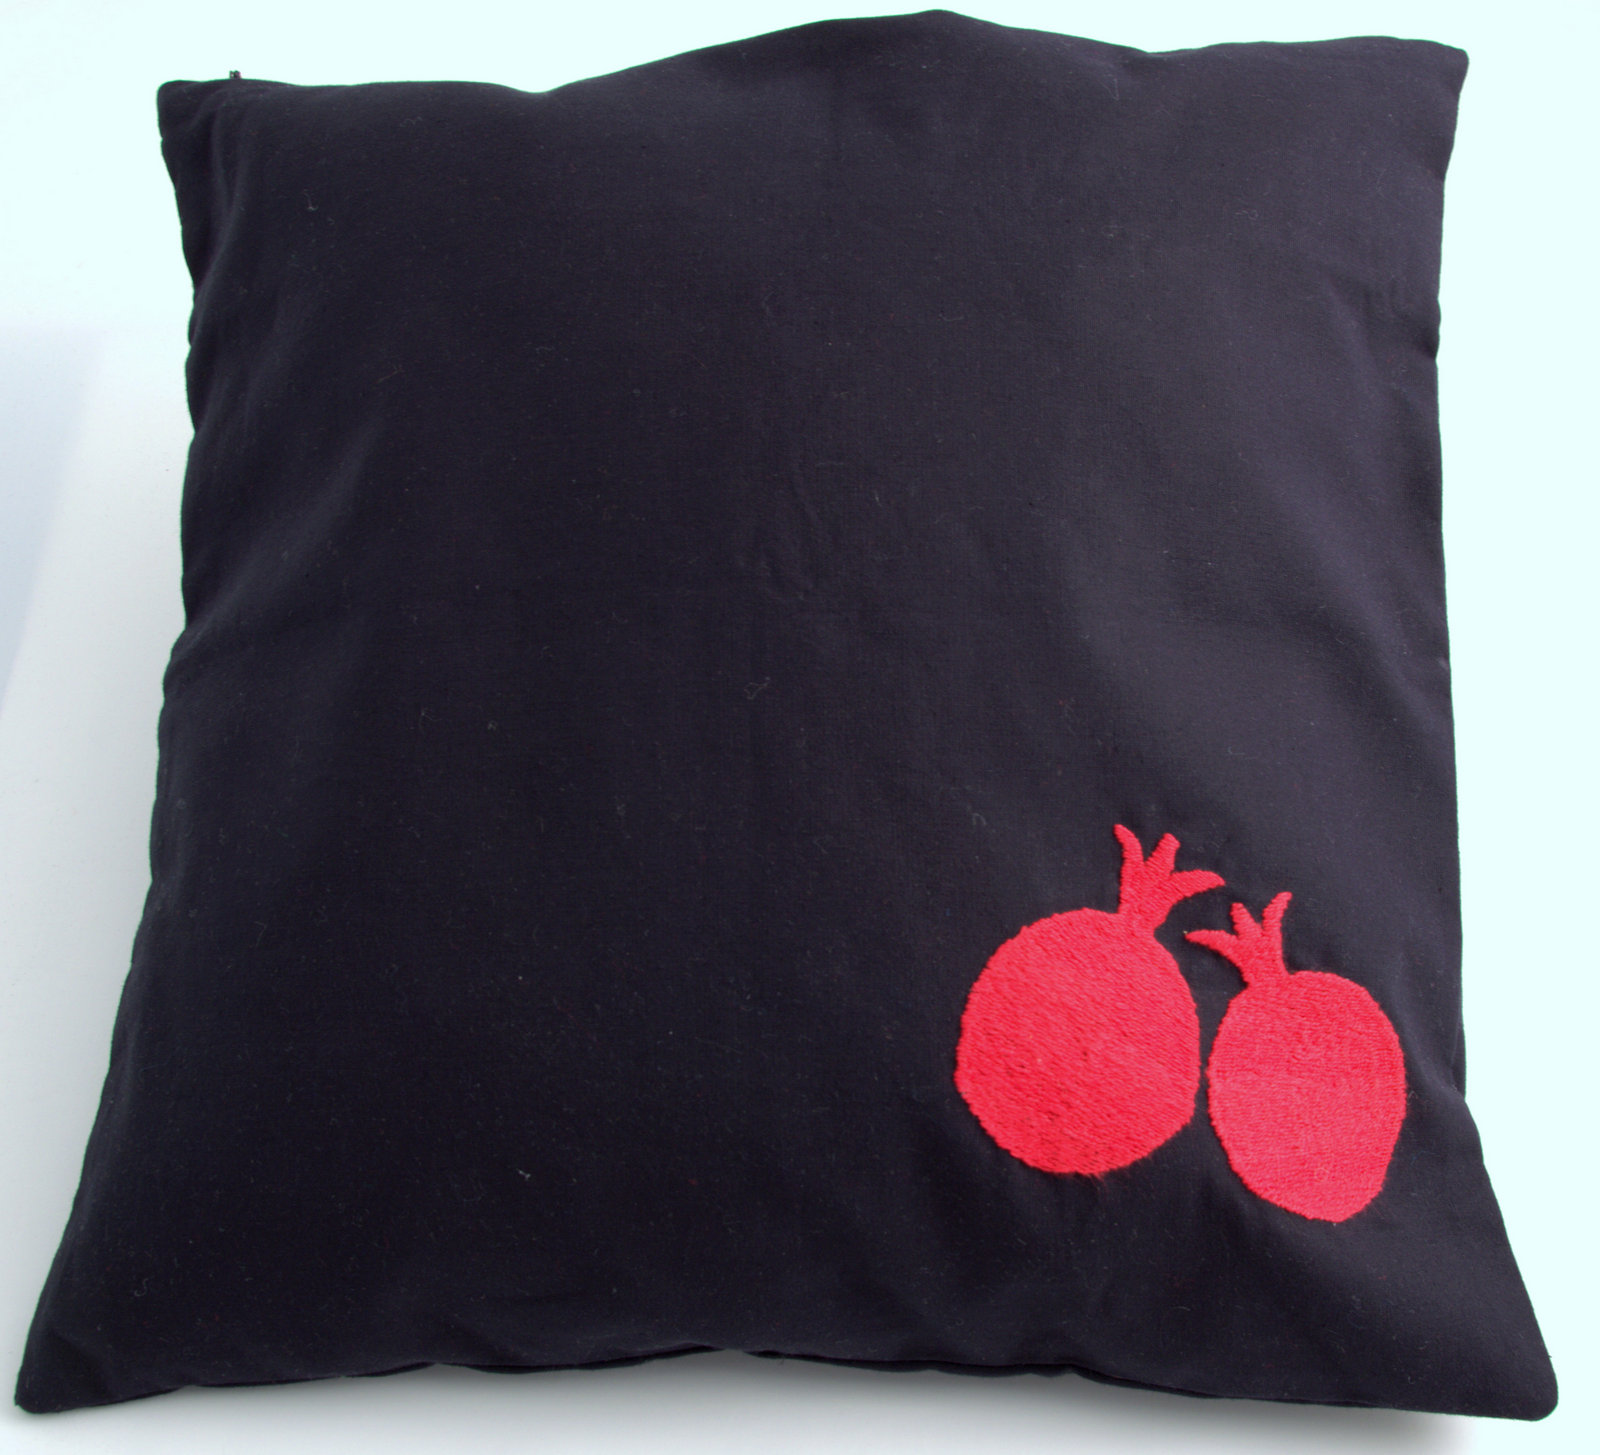 cushion cover for your pillow - handmade in Tajikistan - women's cooperative - Gundara